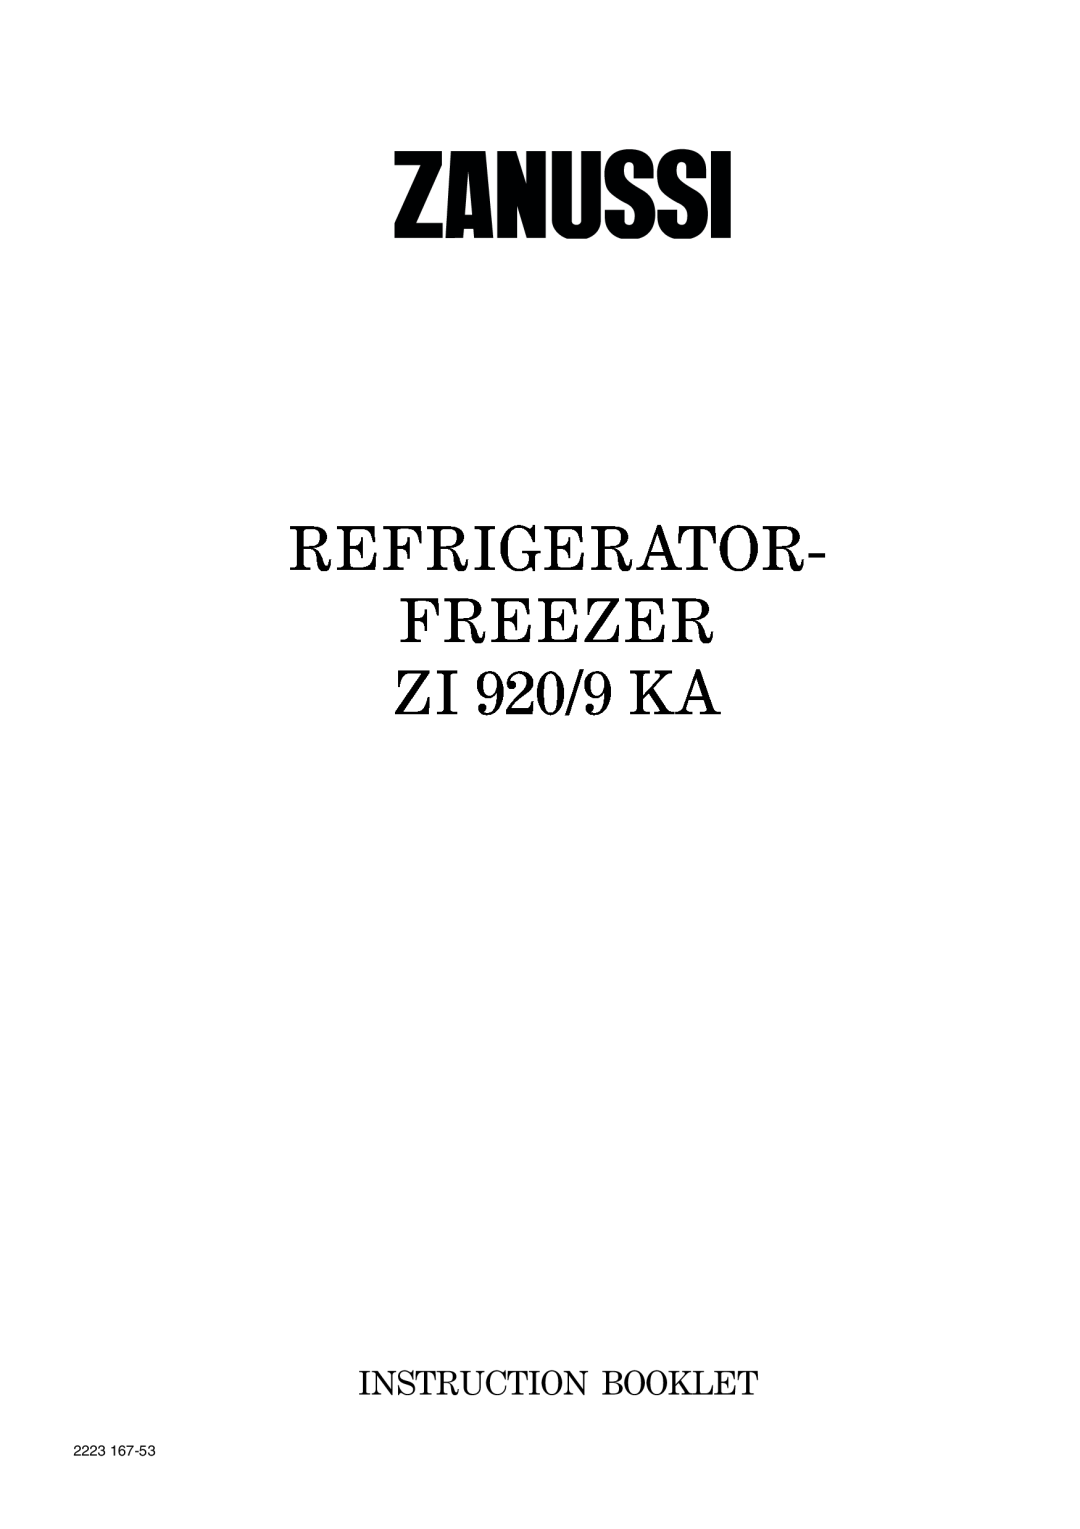 Zanussi manual REFRIGERATOR FREEZER ZI 920/9 KA, Instruction Booklet, 2223 